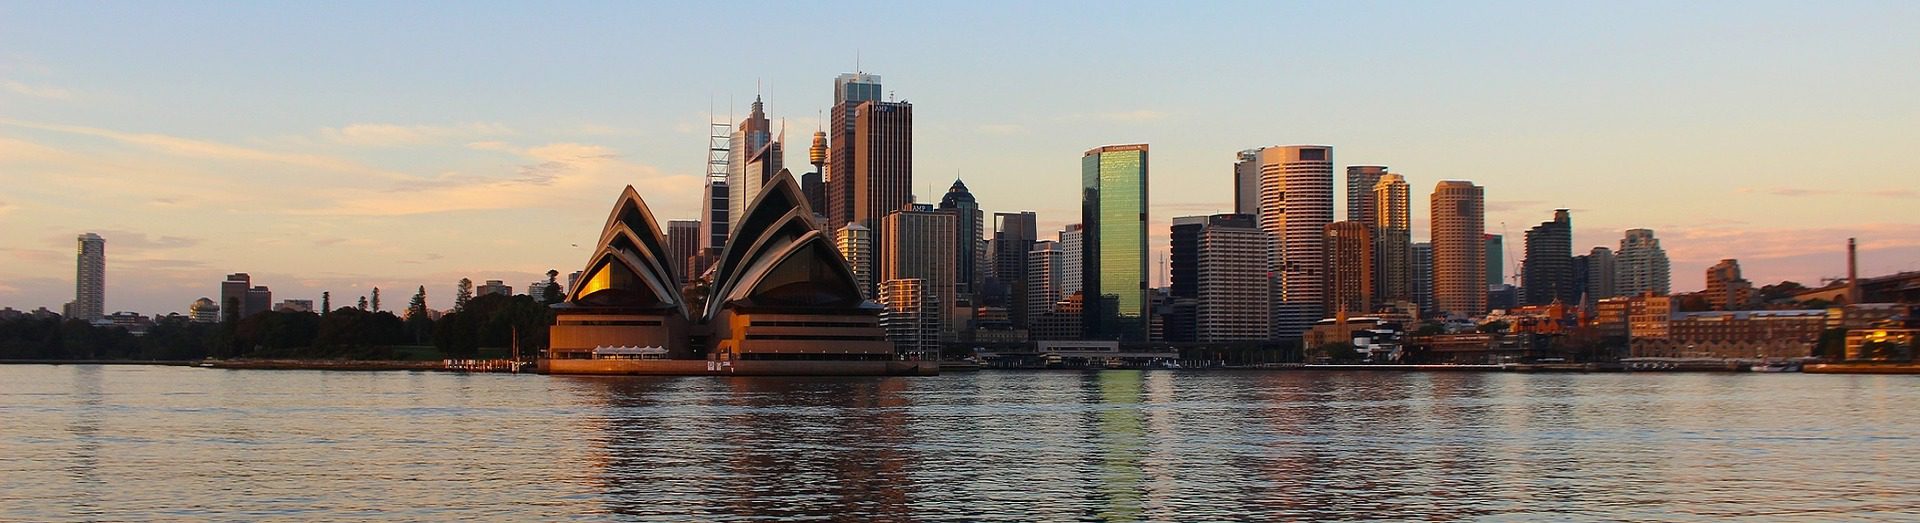 Sydney Opera House and skyline, Australia